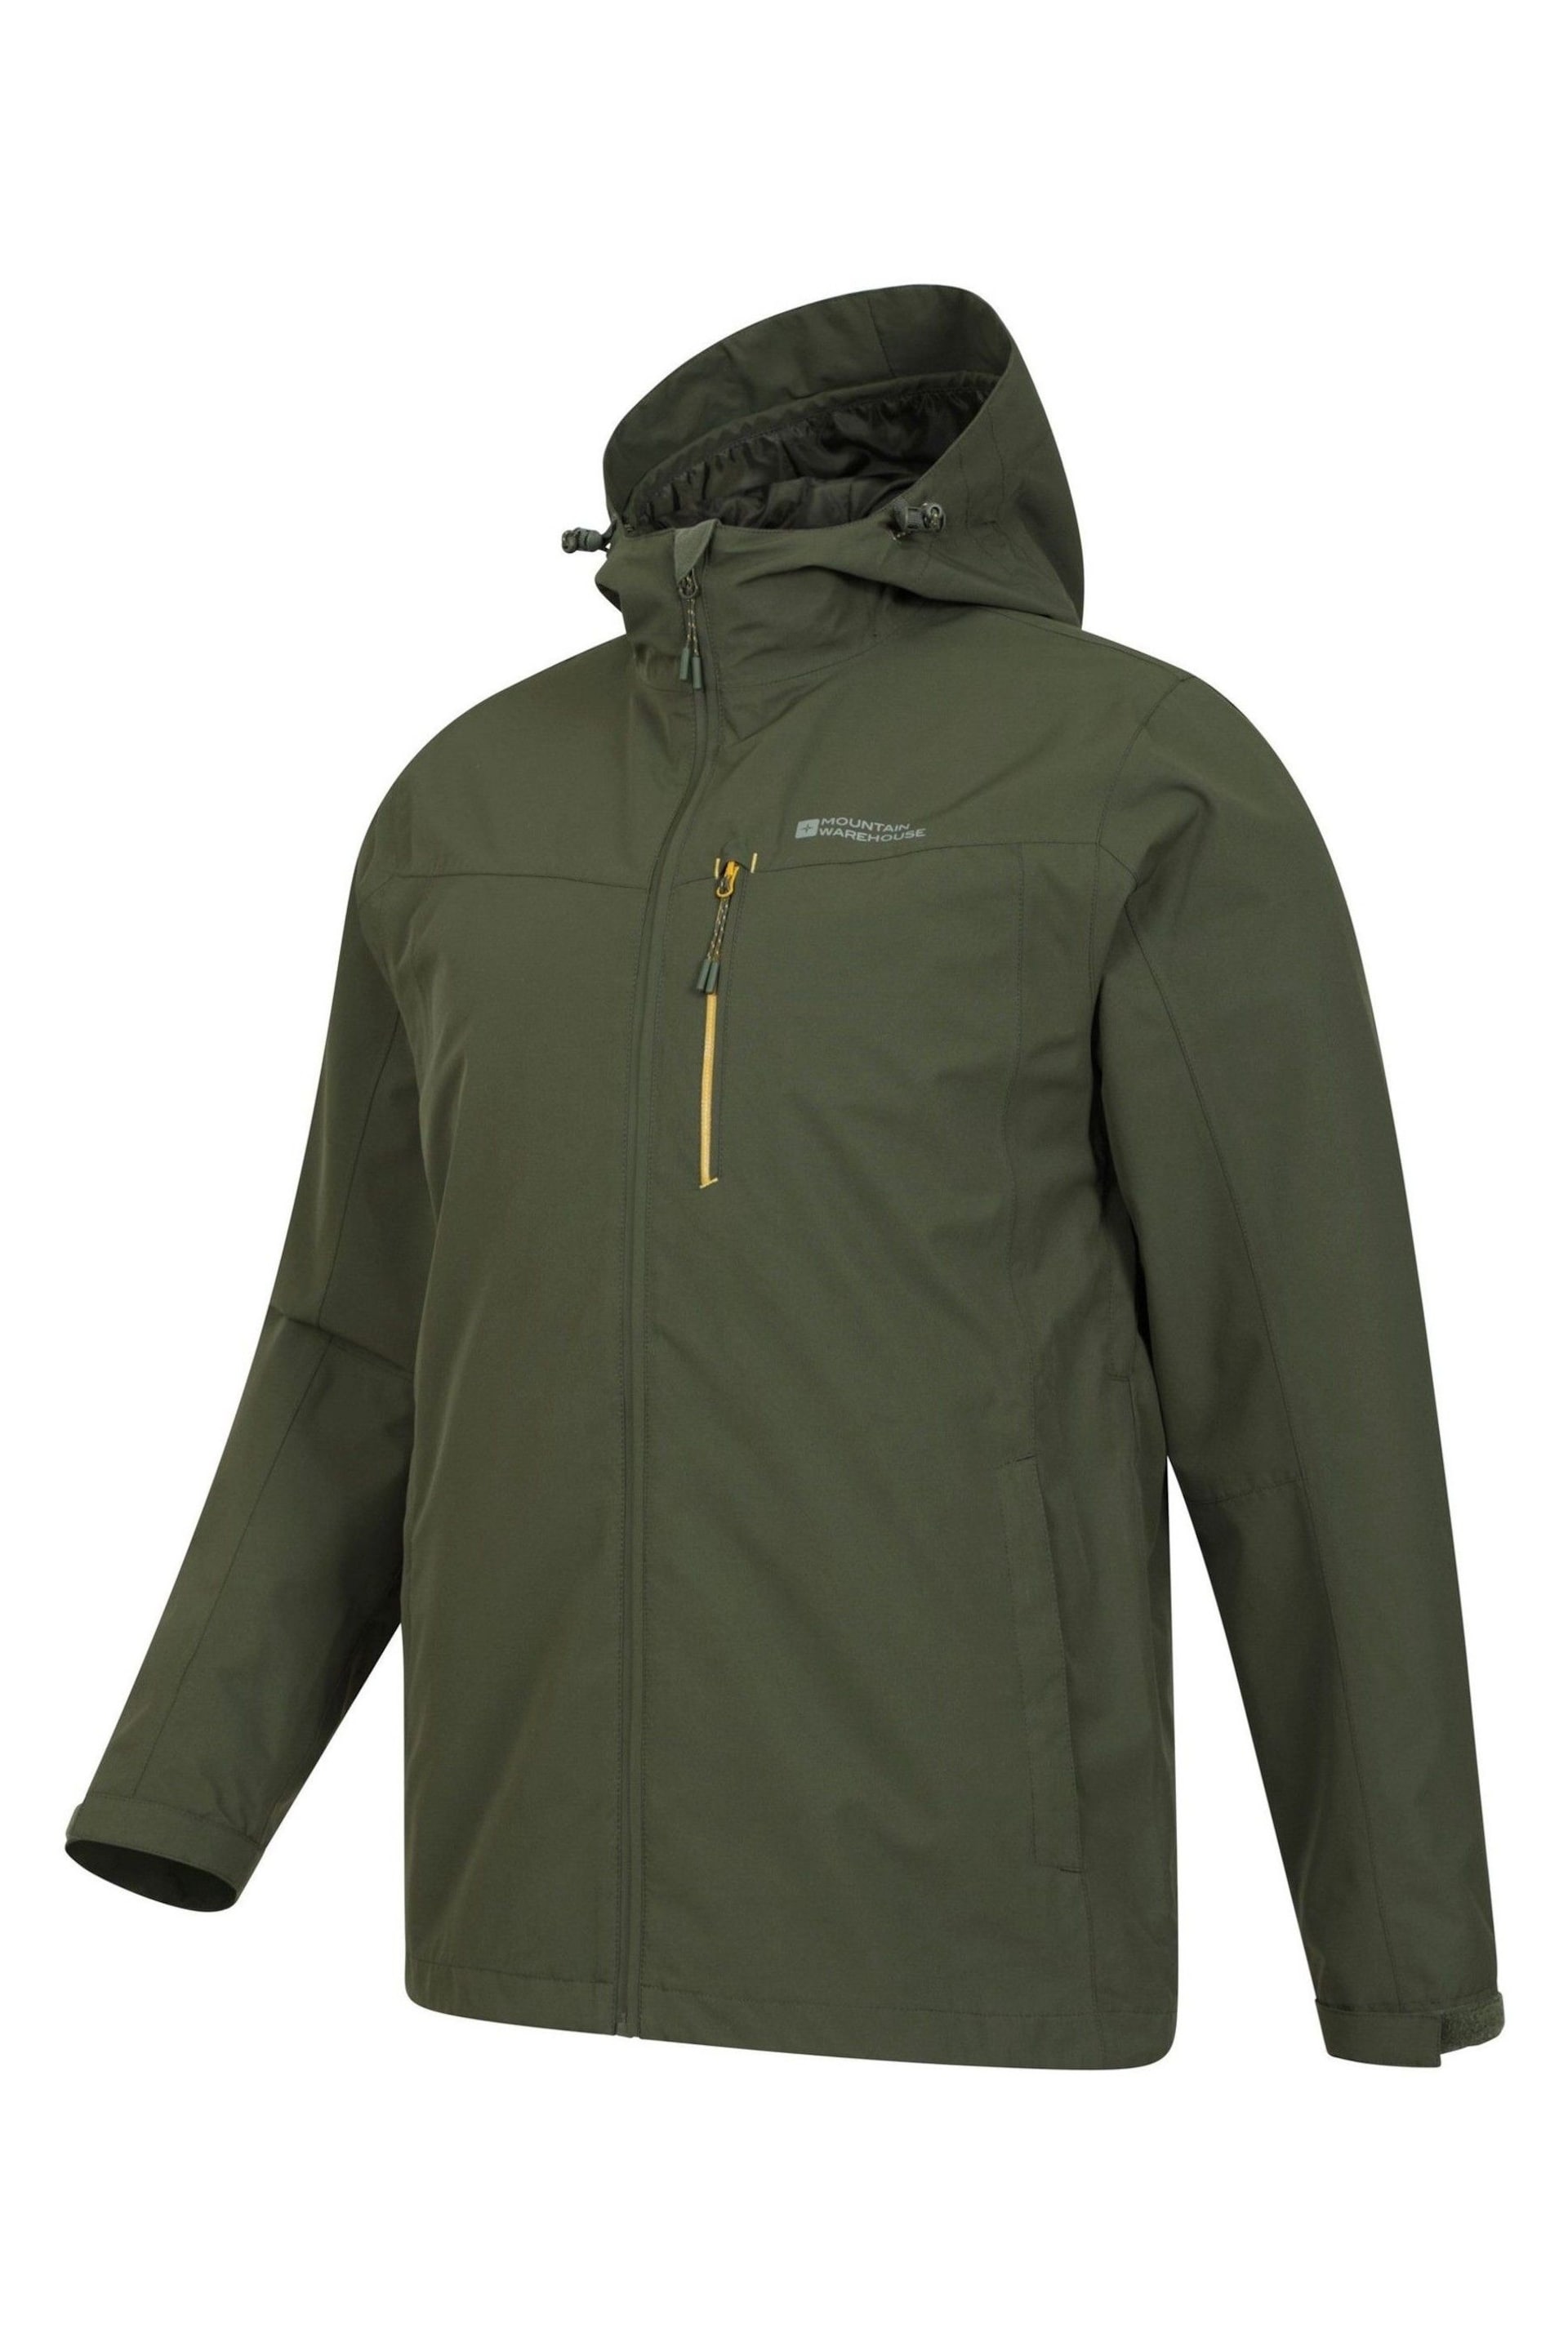 Mountain Warehouse Green Brisk Extreme Waterproof Jacket - Mens - Image 4 of 5